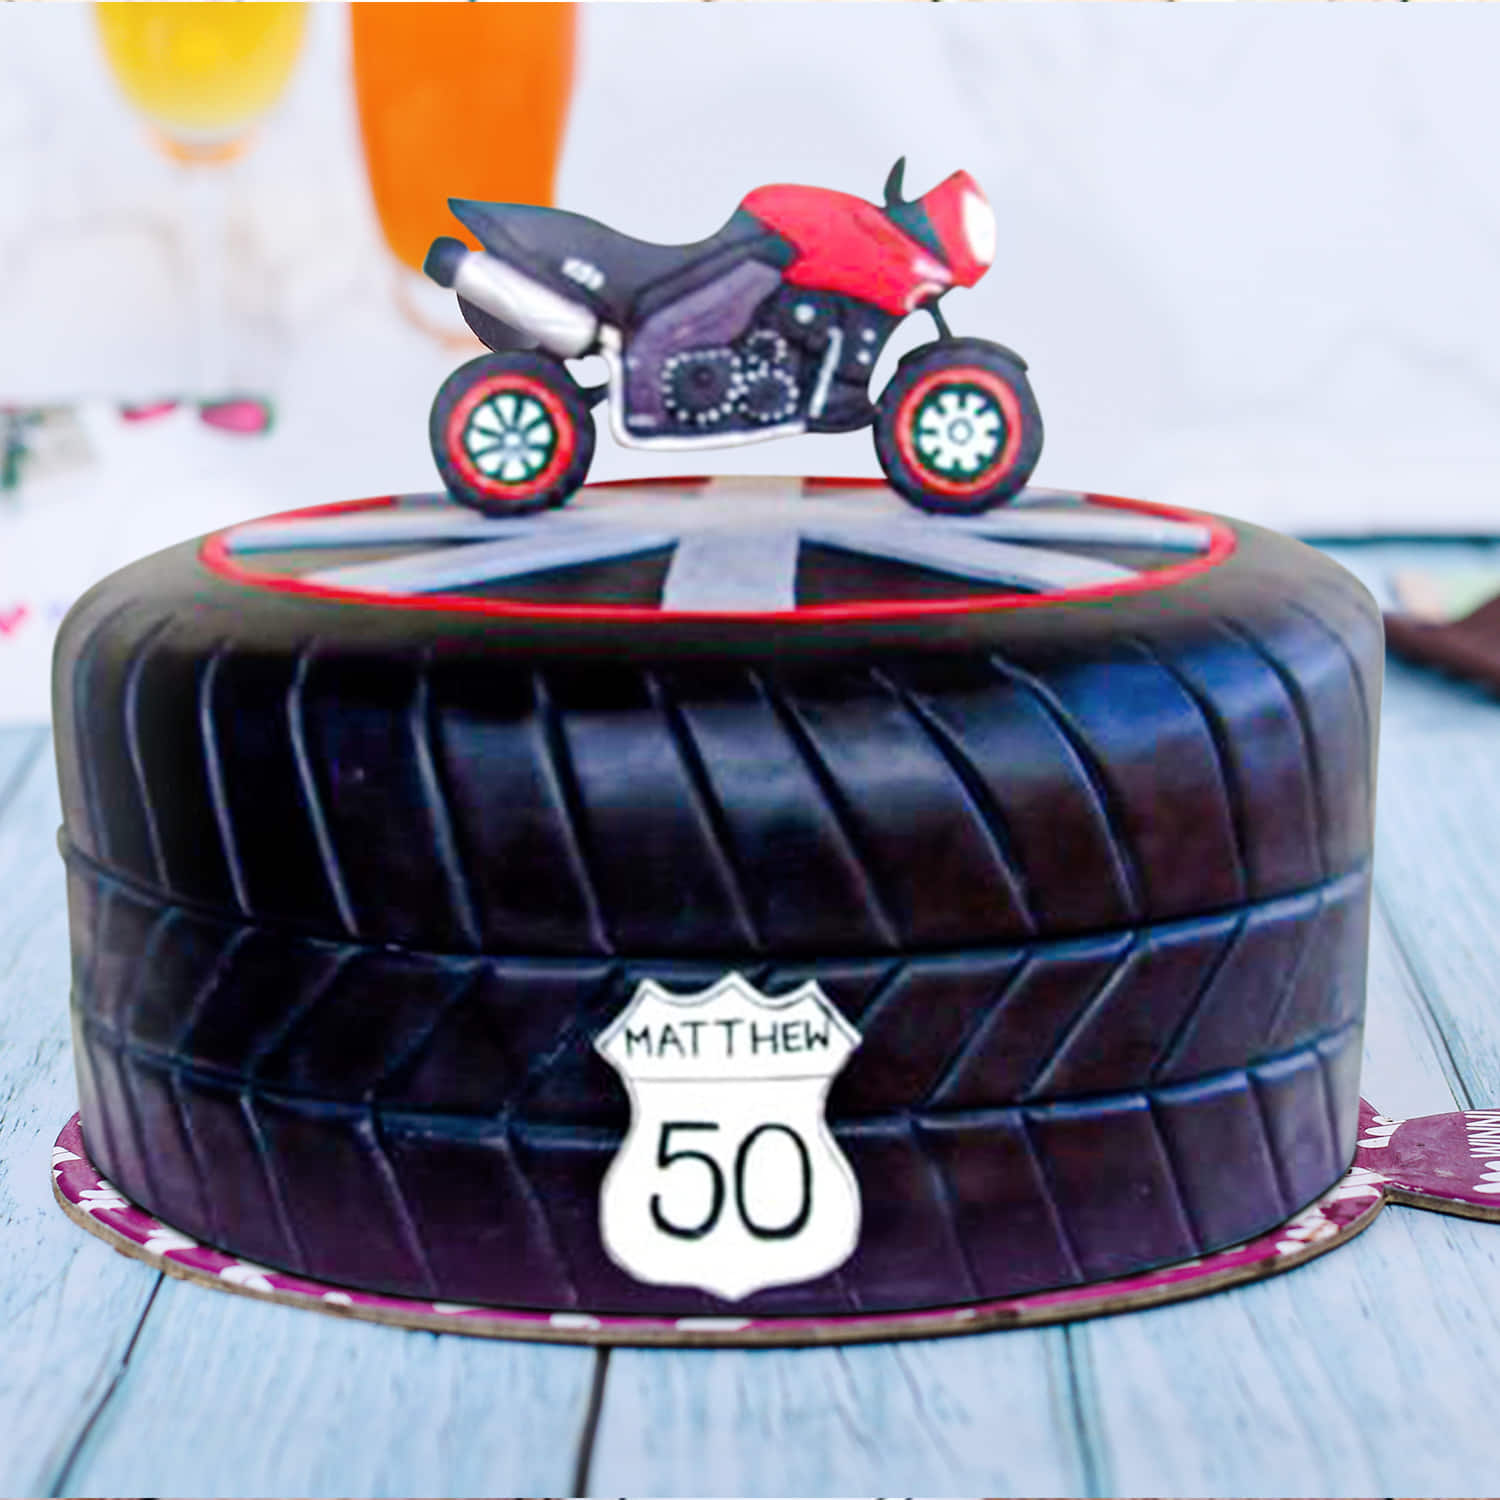 KTM Bike Toy Cake